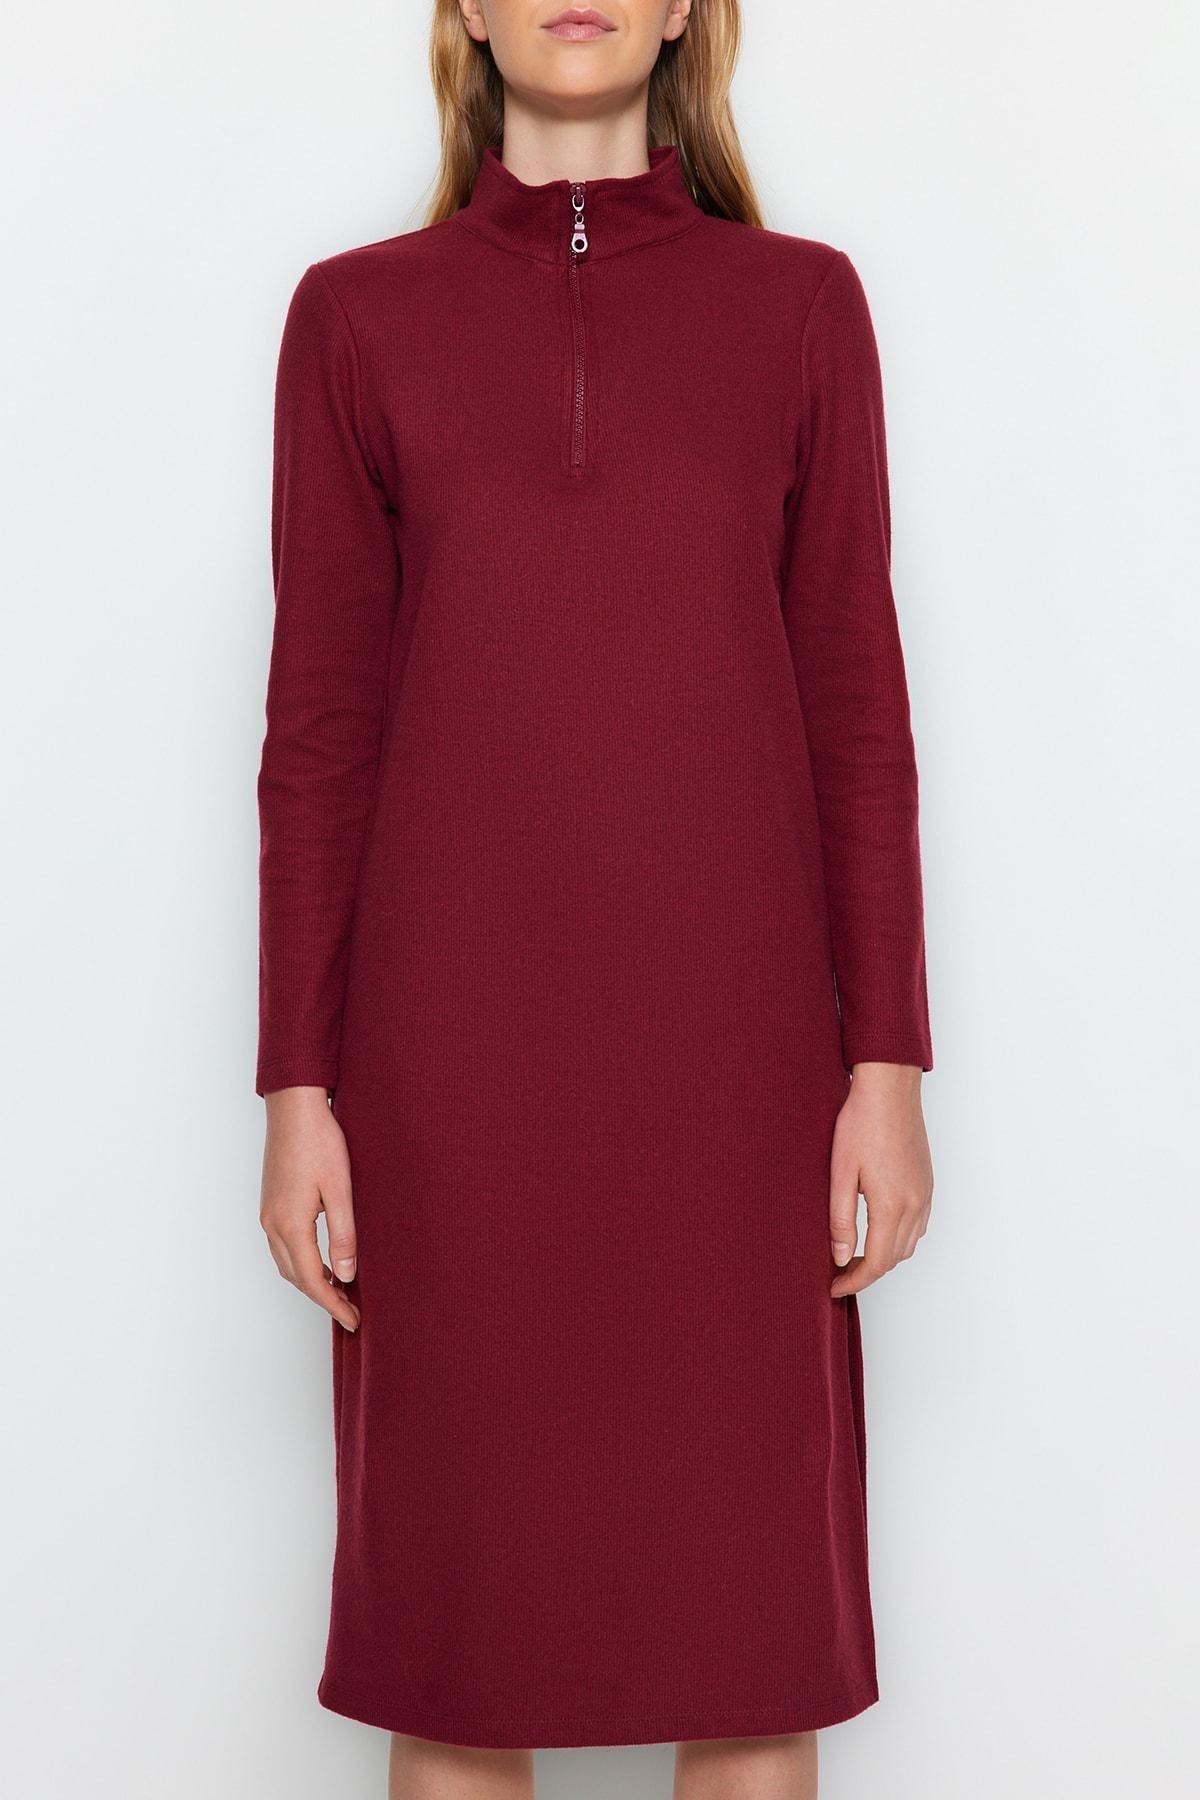 Trendyol - Burgundy Slit Midi Knitted Dress